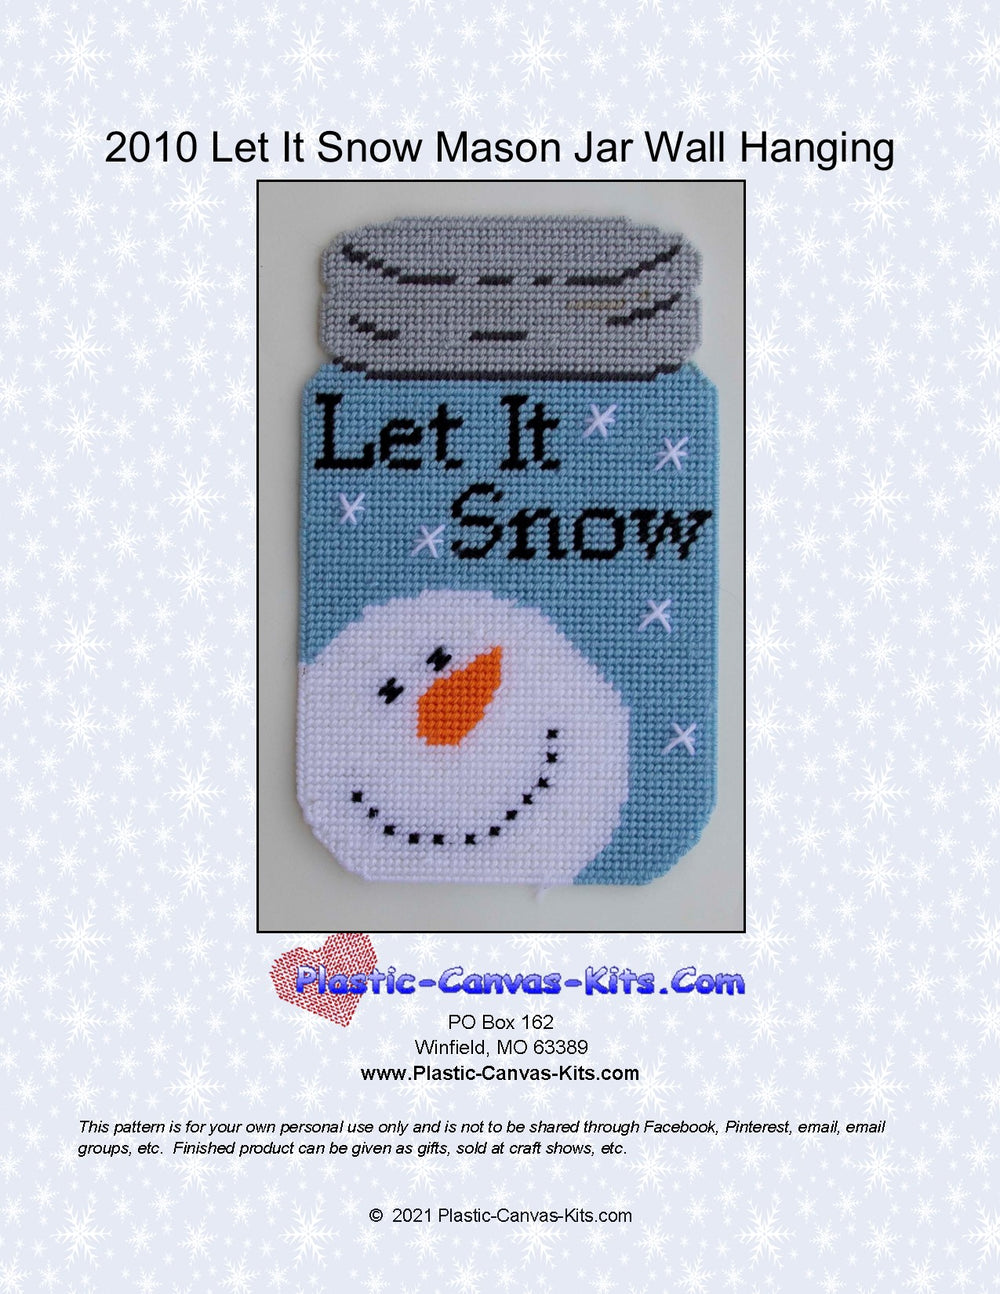 Let it Snow Mason Jar Wall Hanging